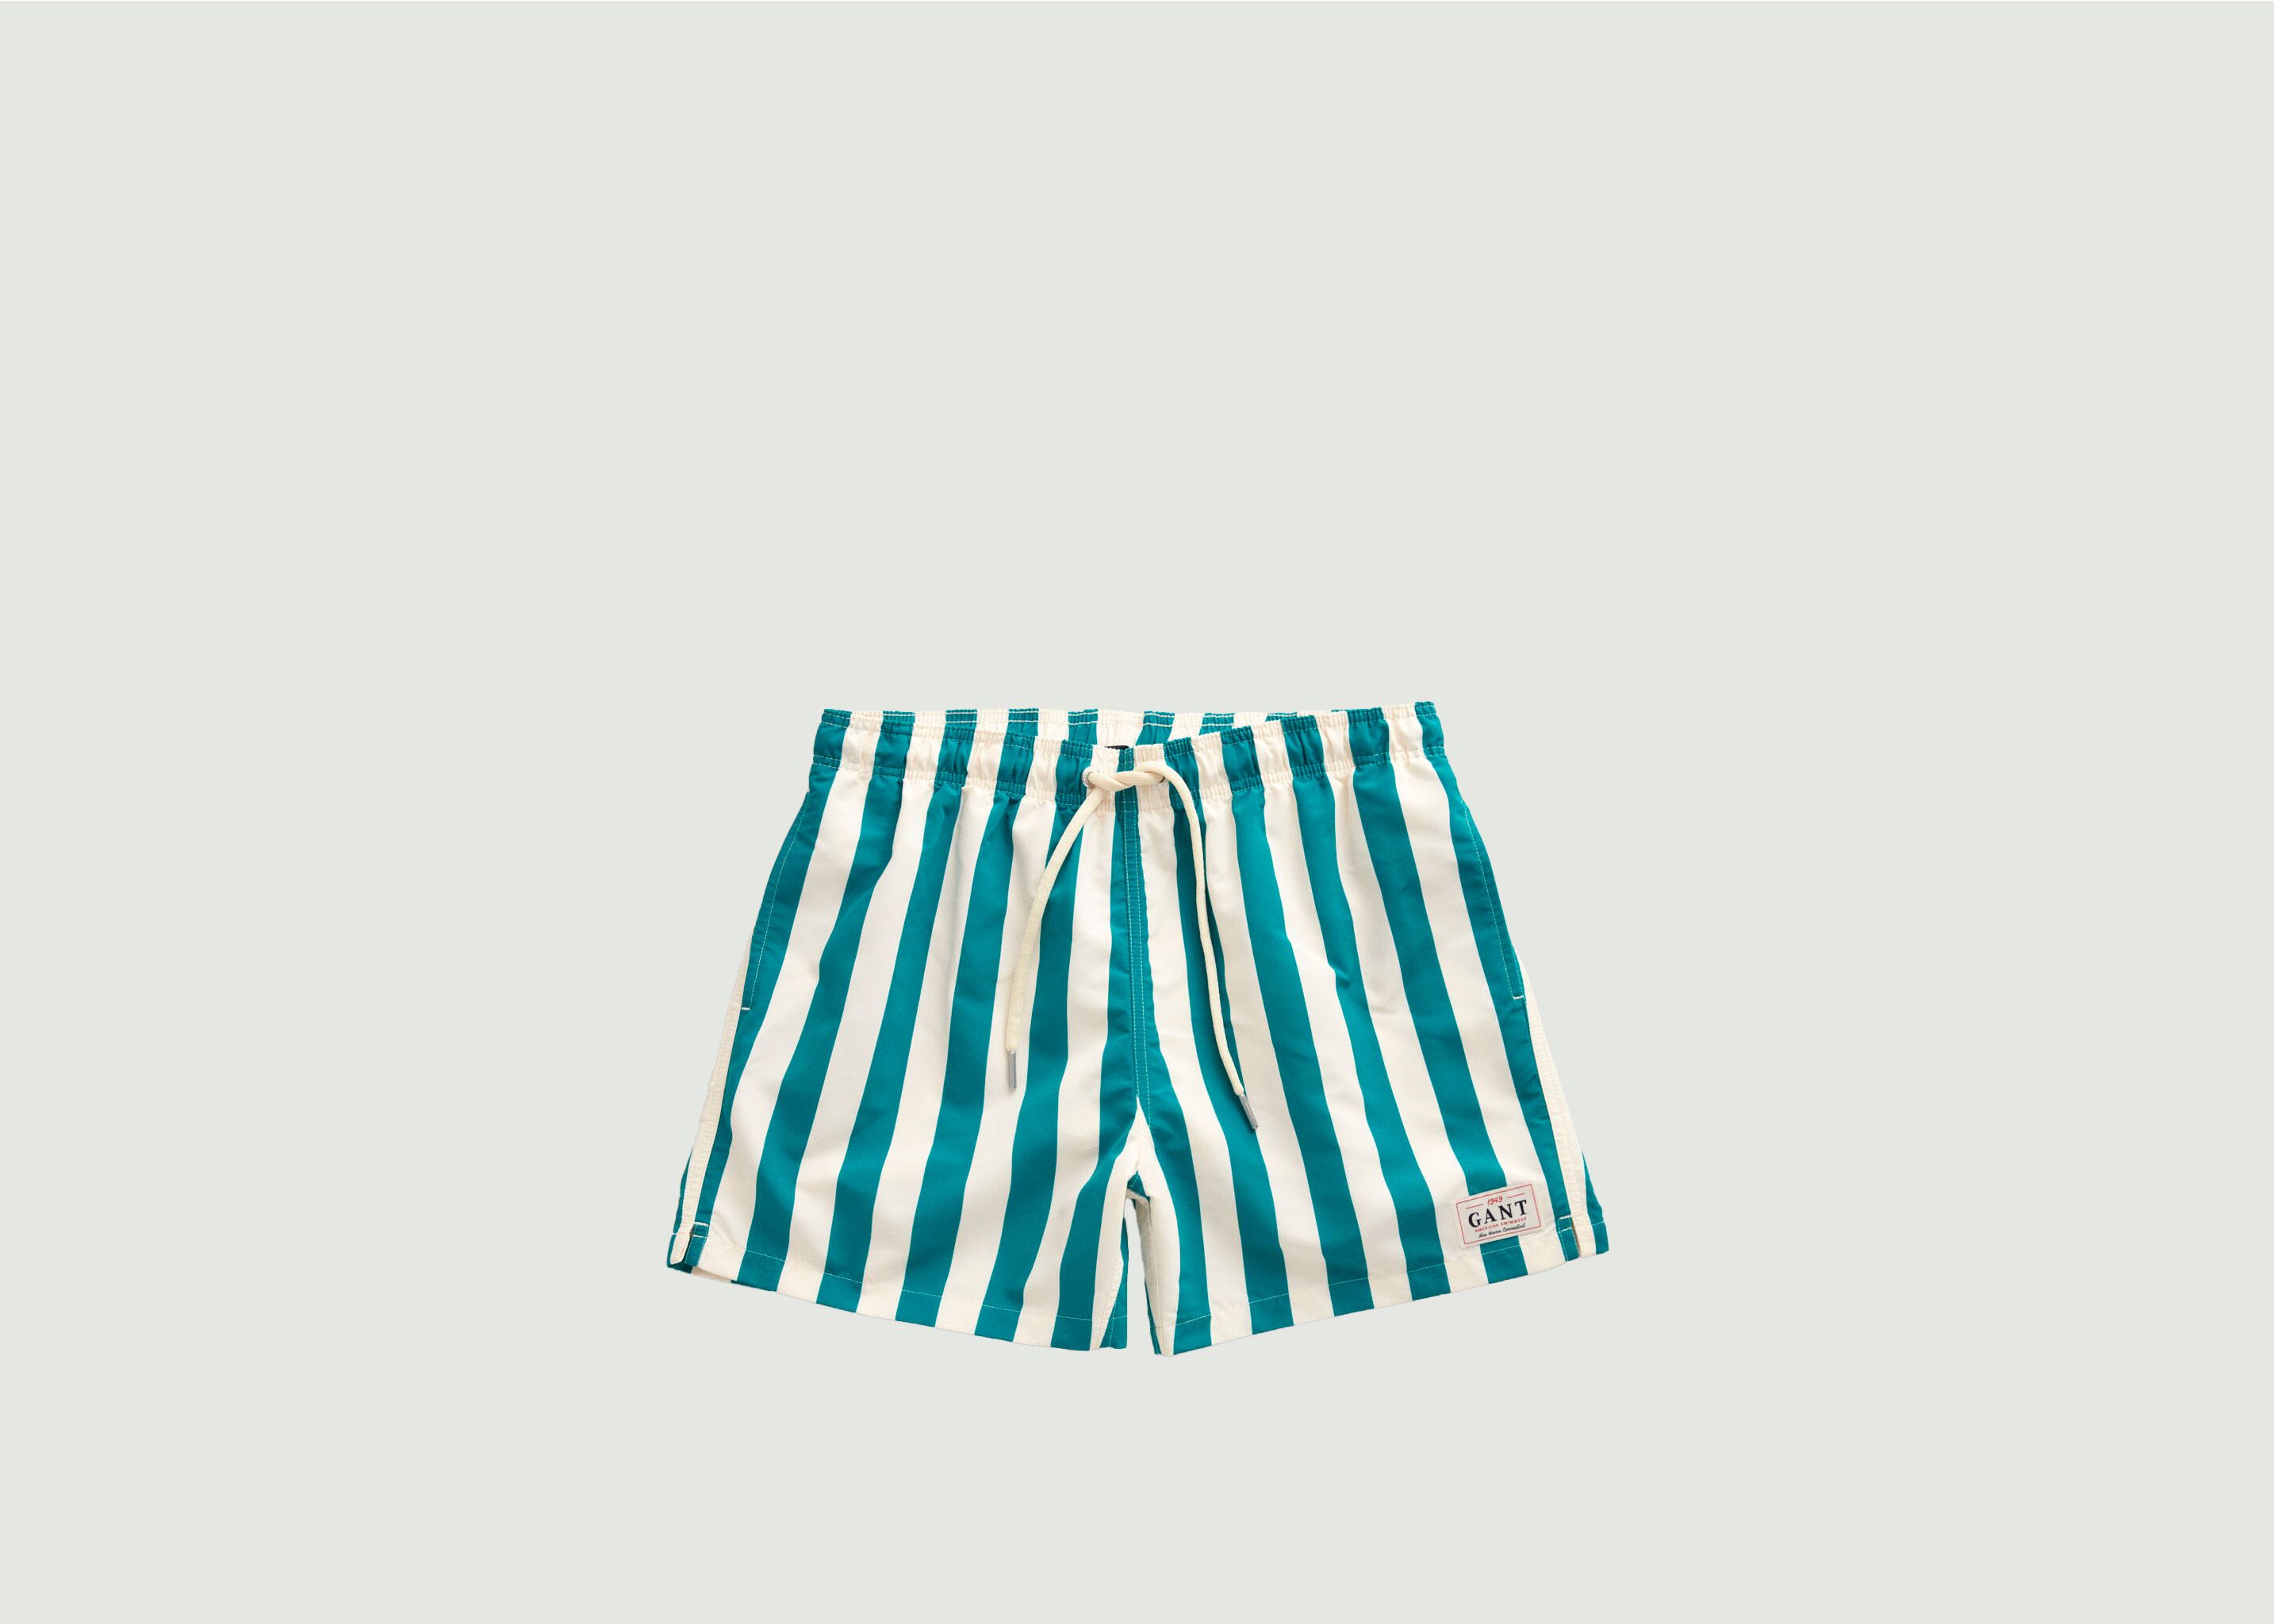 Striped Swim Shorts - Gant